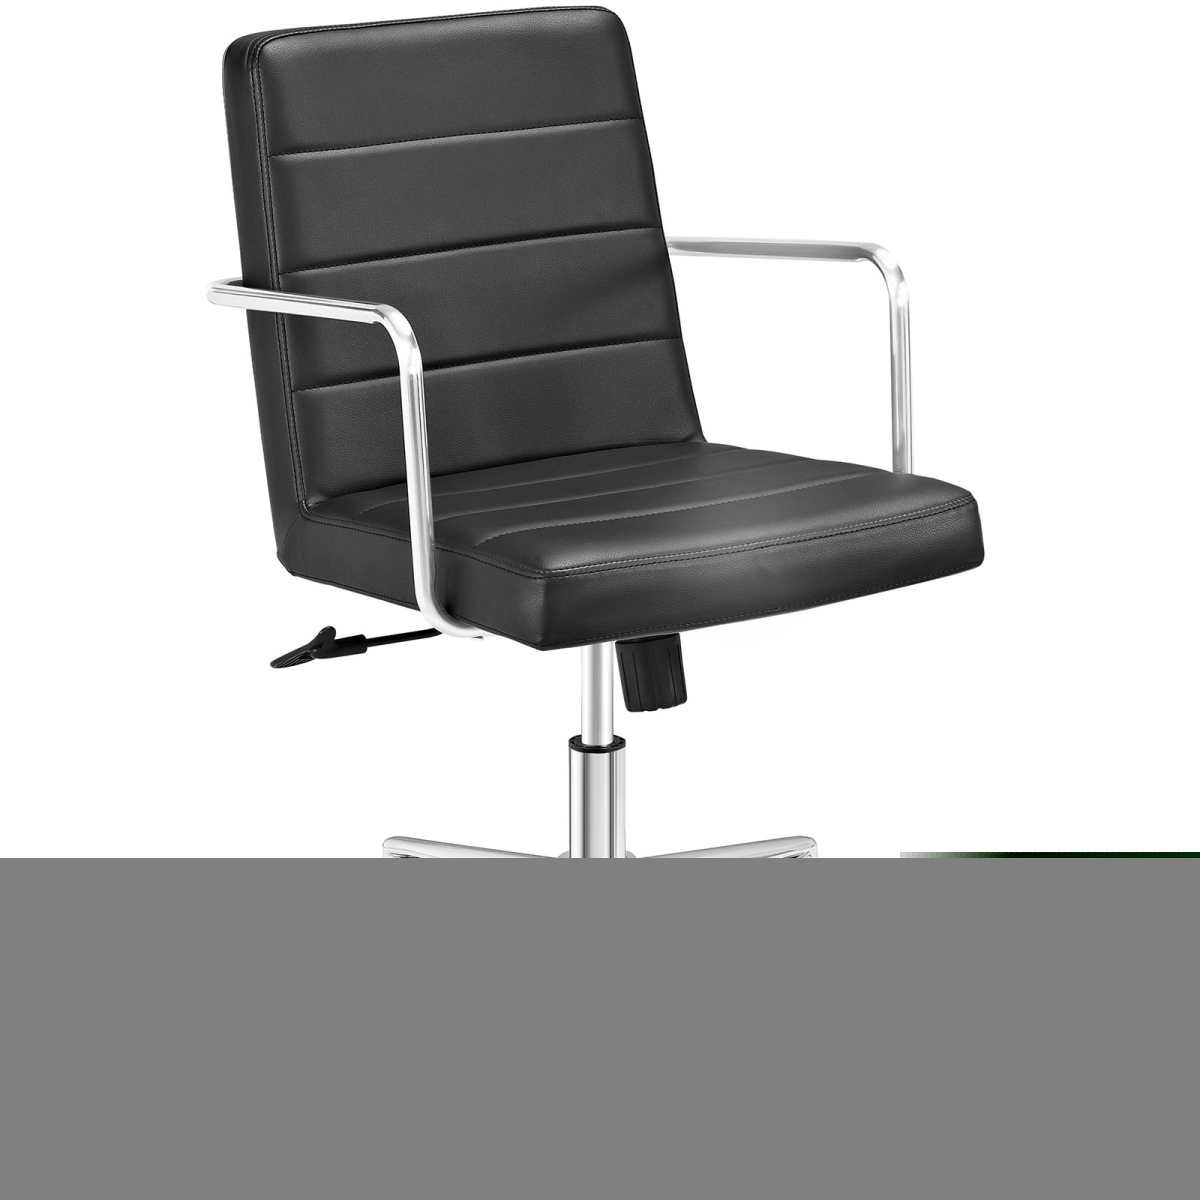 Modway Eei-2125-blk Cavalier Mid Back Office Chair, Black